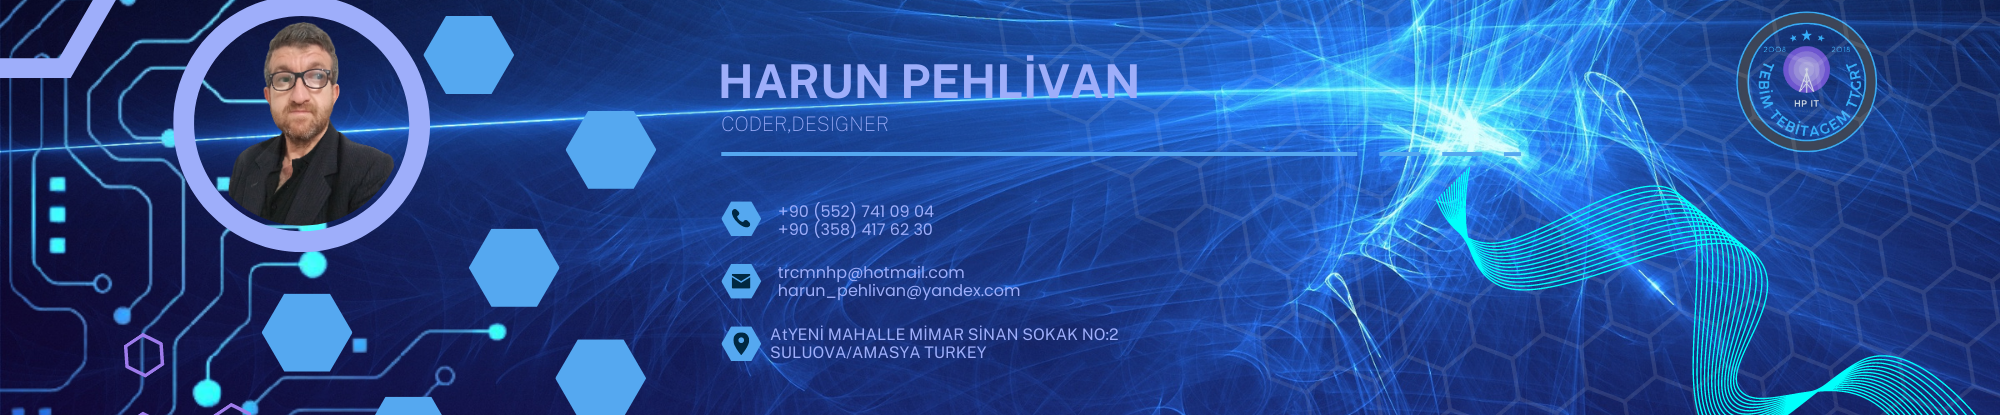 HARUN PEHLİVAN's profile banner